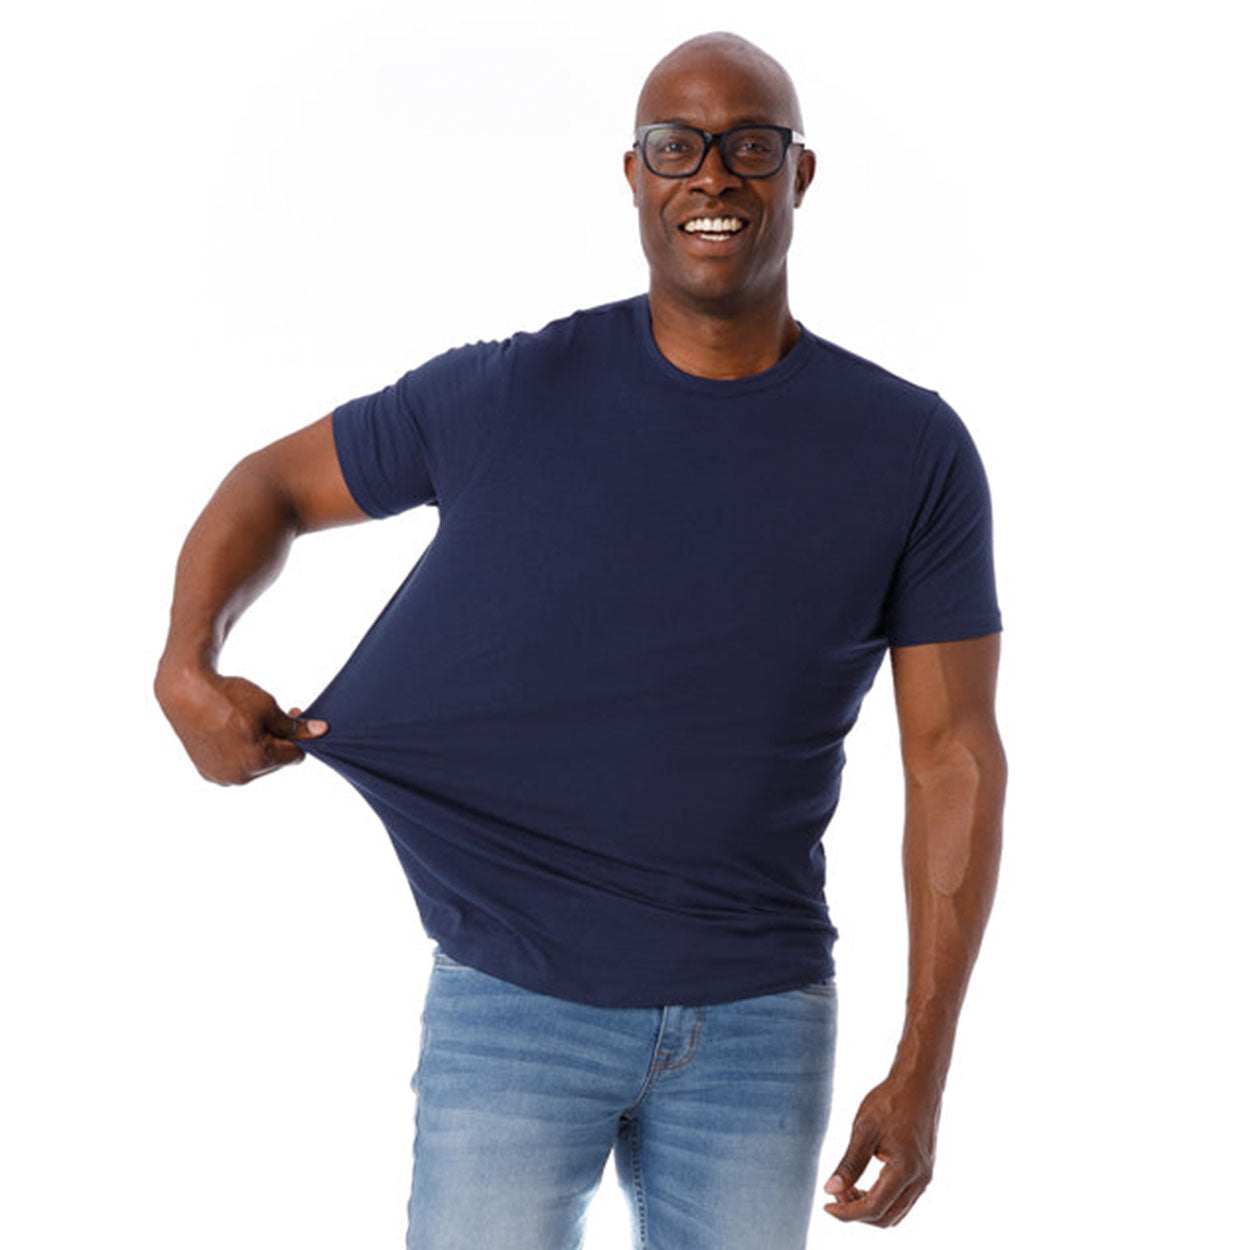 Believe T-Shirts For Men || Black || Stylish Tshirts || 100% Cotton || Best  T-Shirt For Men's